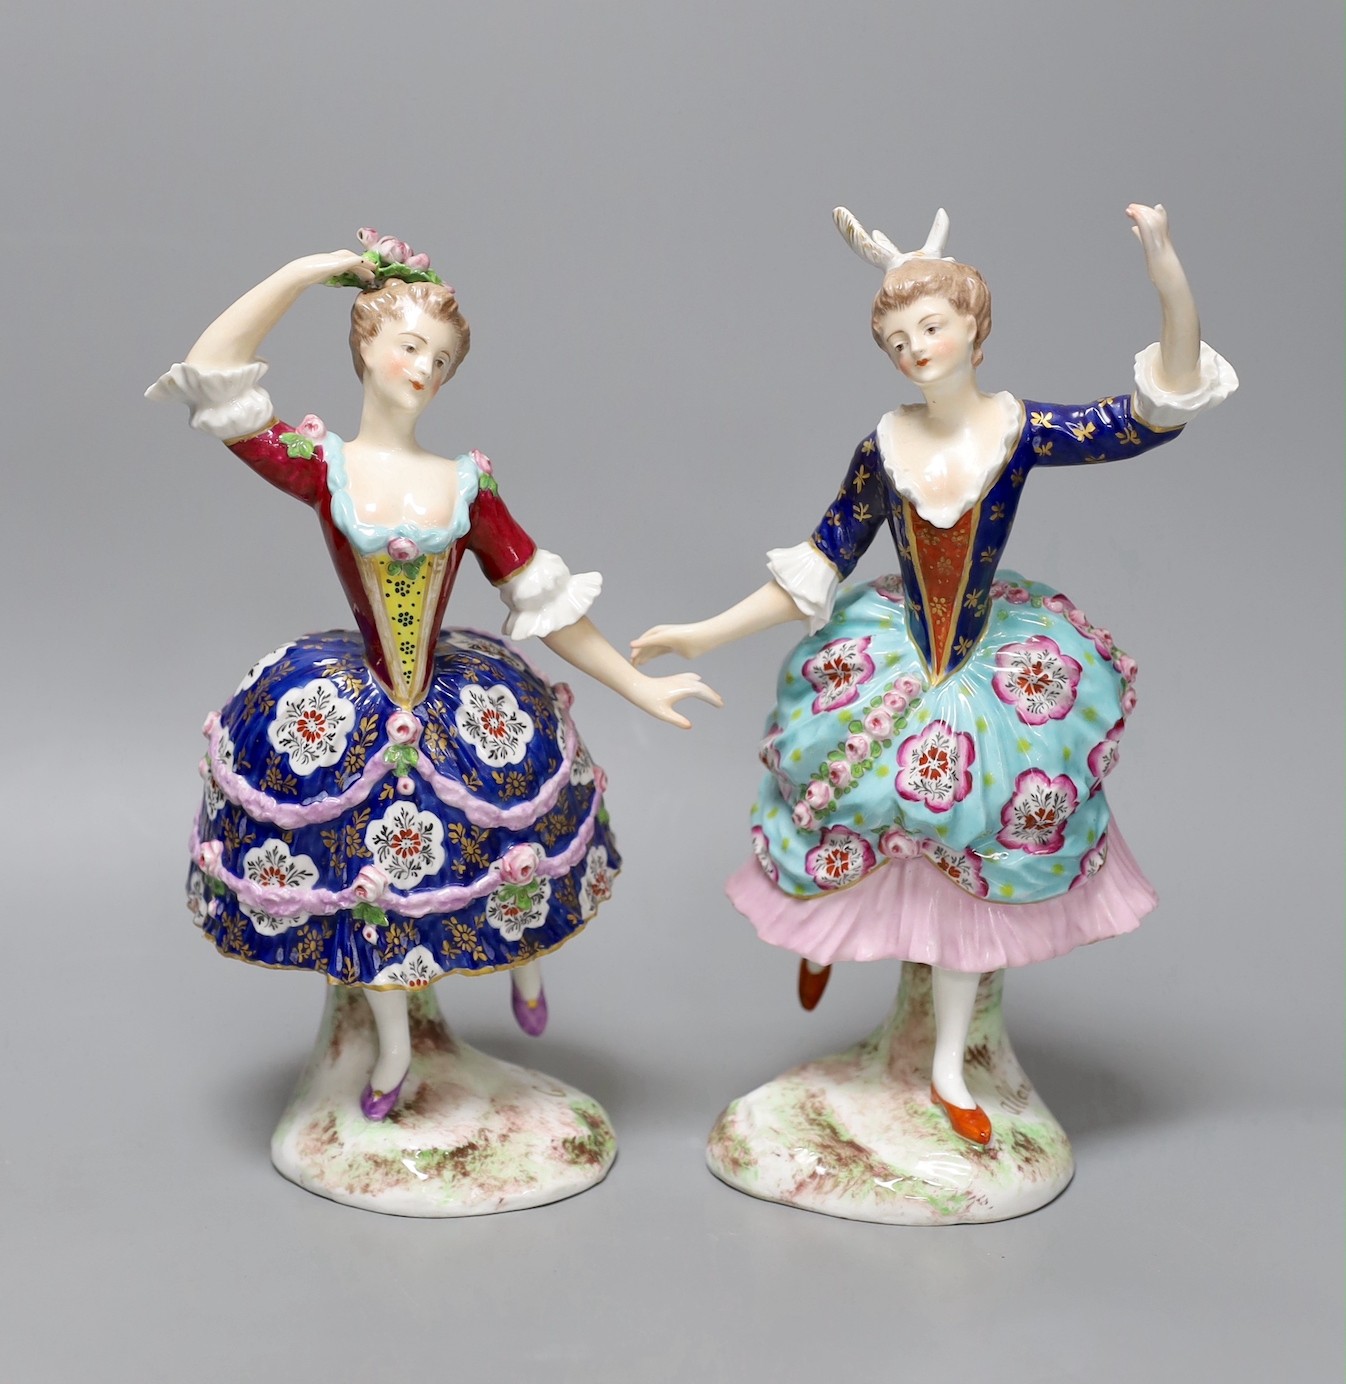 A pair of Samson female dancer figurines, tallest 25 cms high